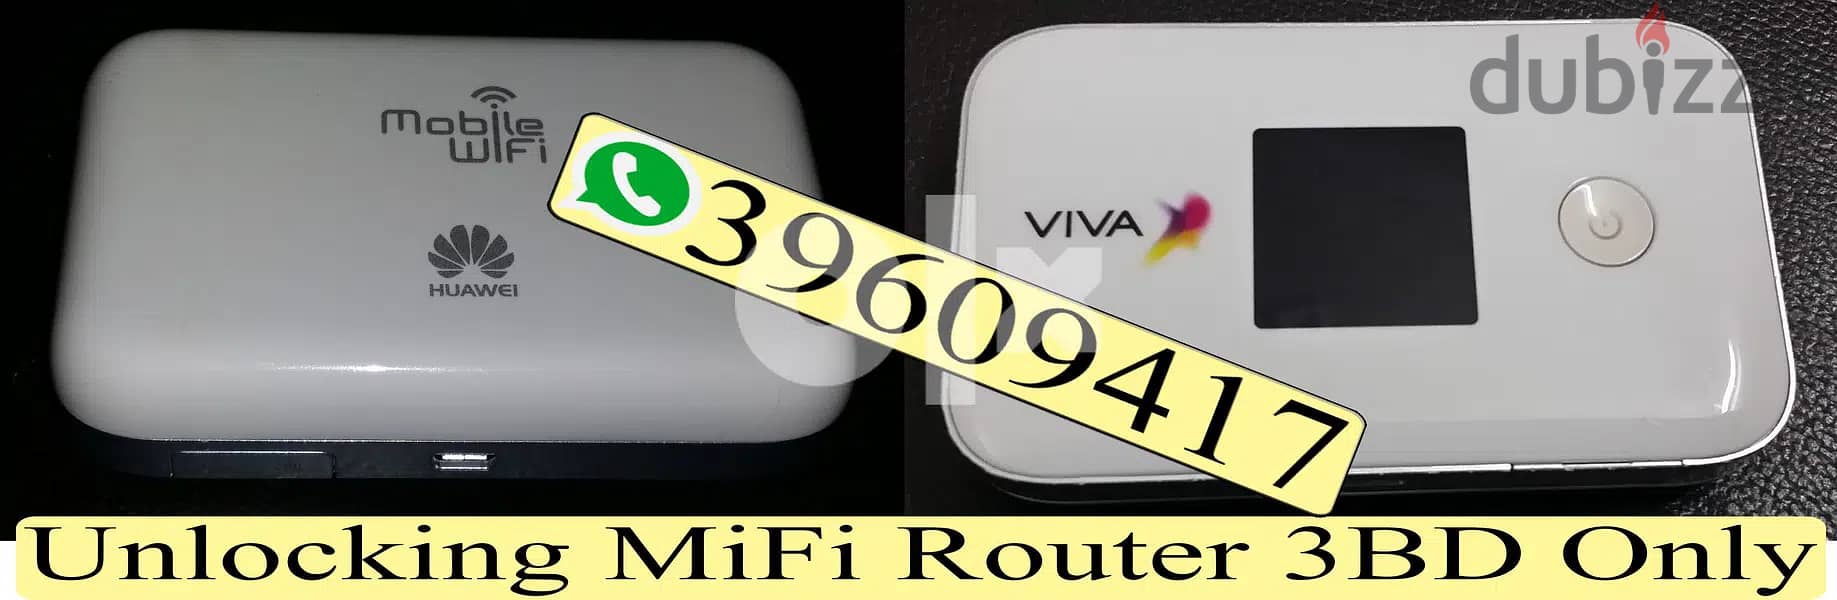 Unlocking MiFi Router Huawei E5577s-321 (Not for sale) 0